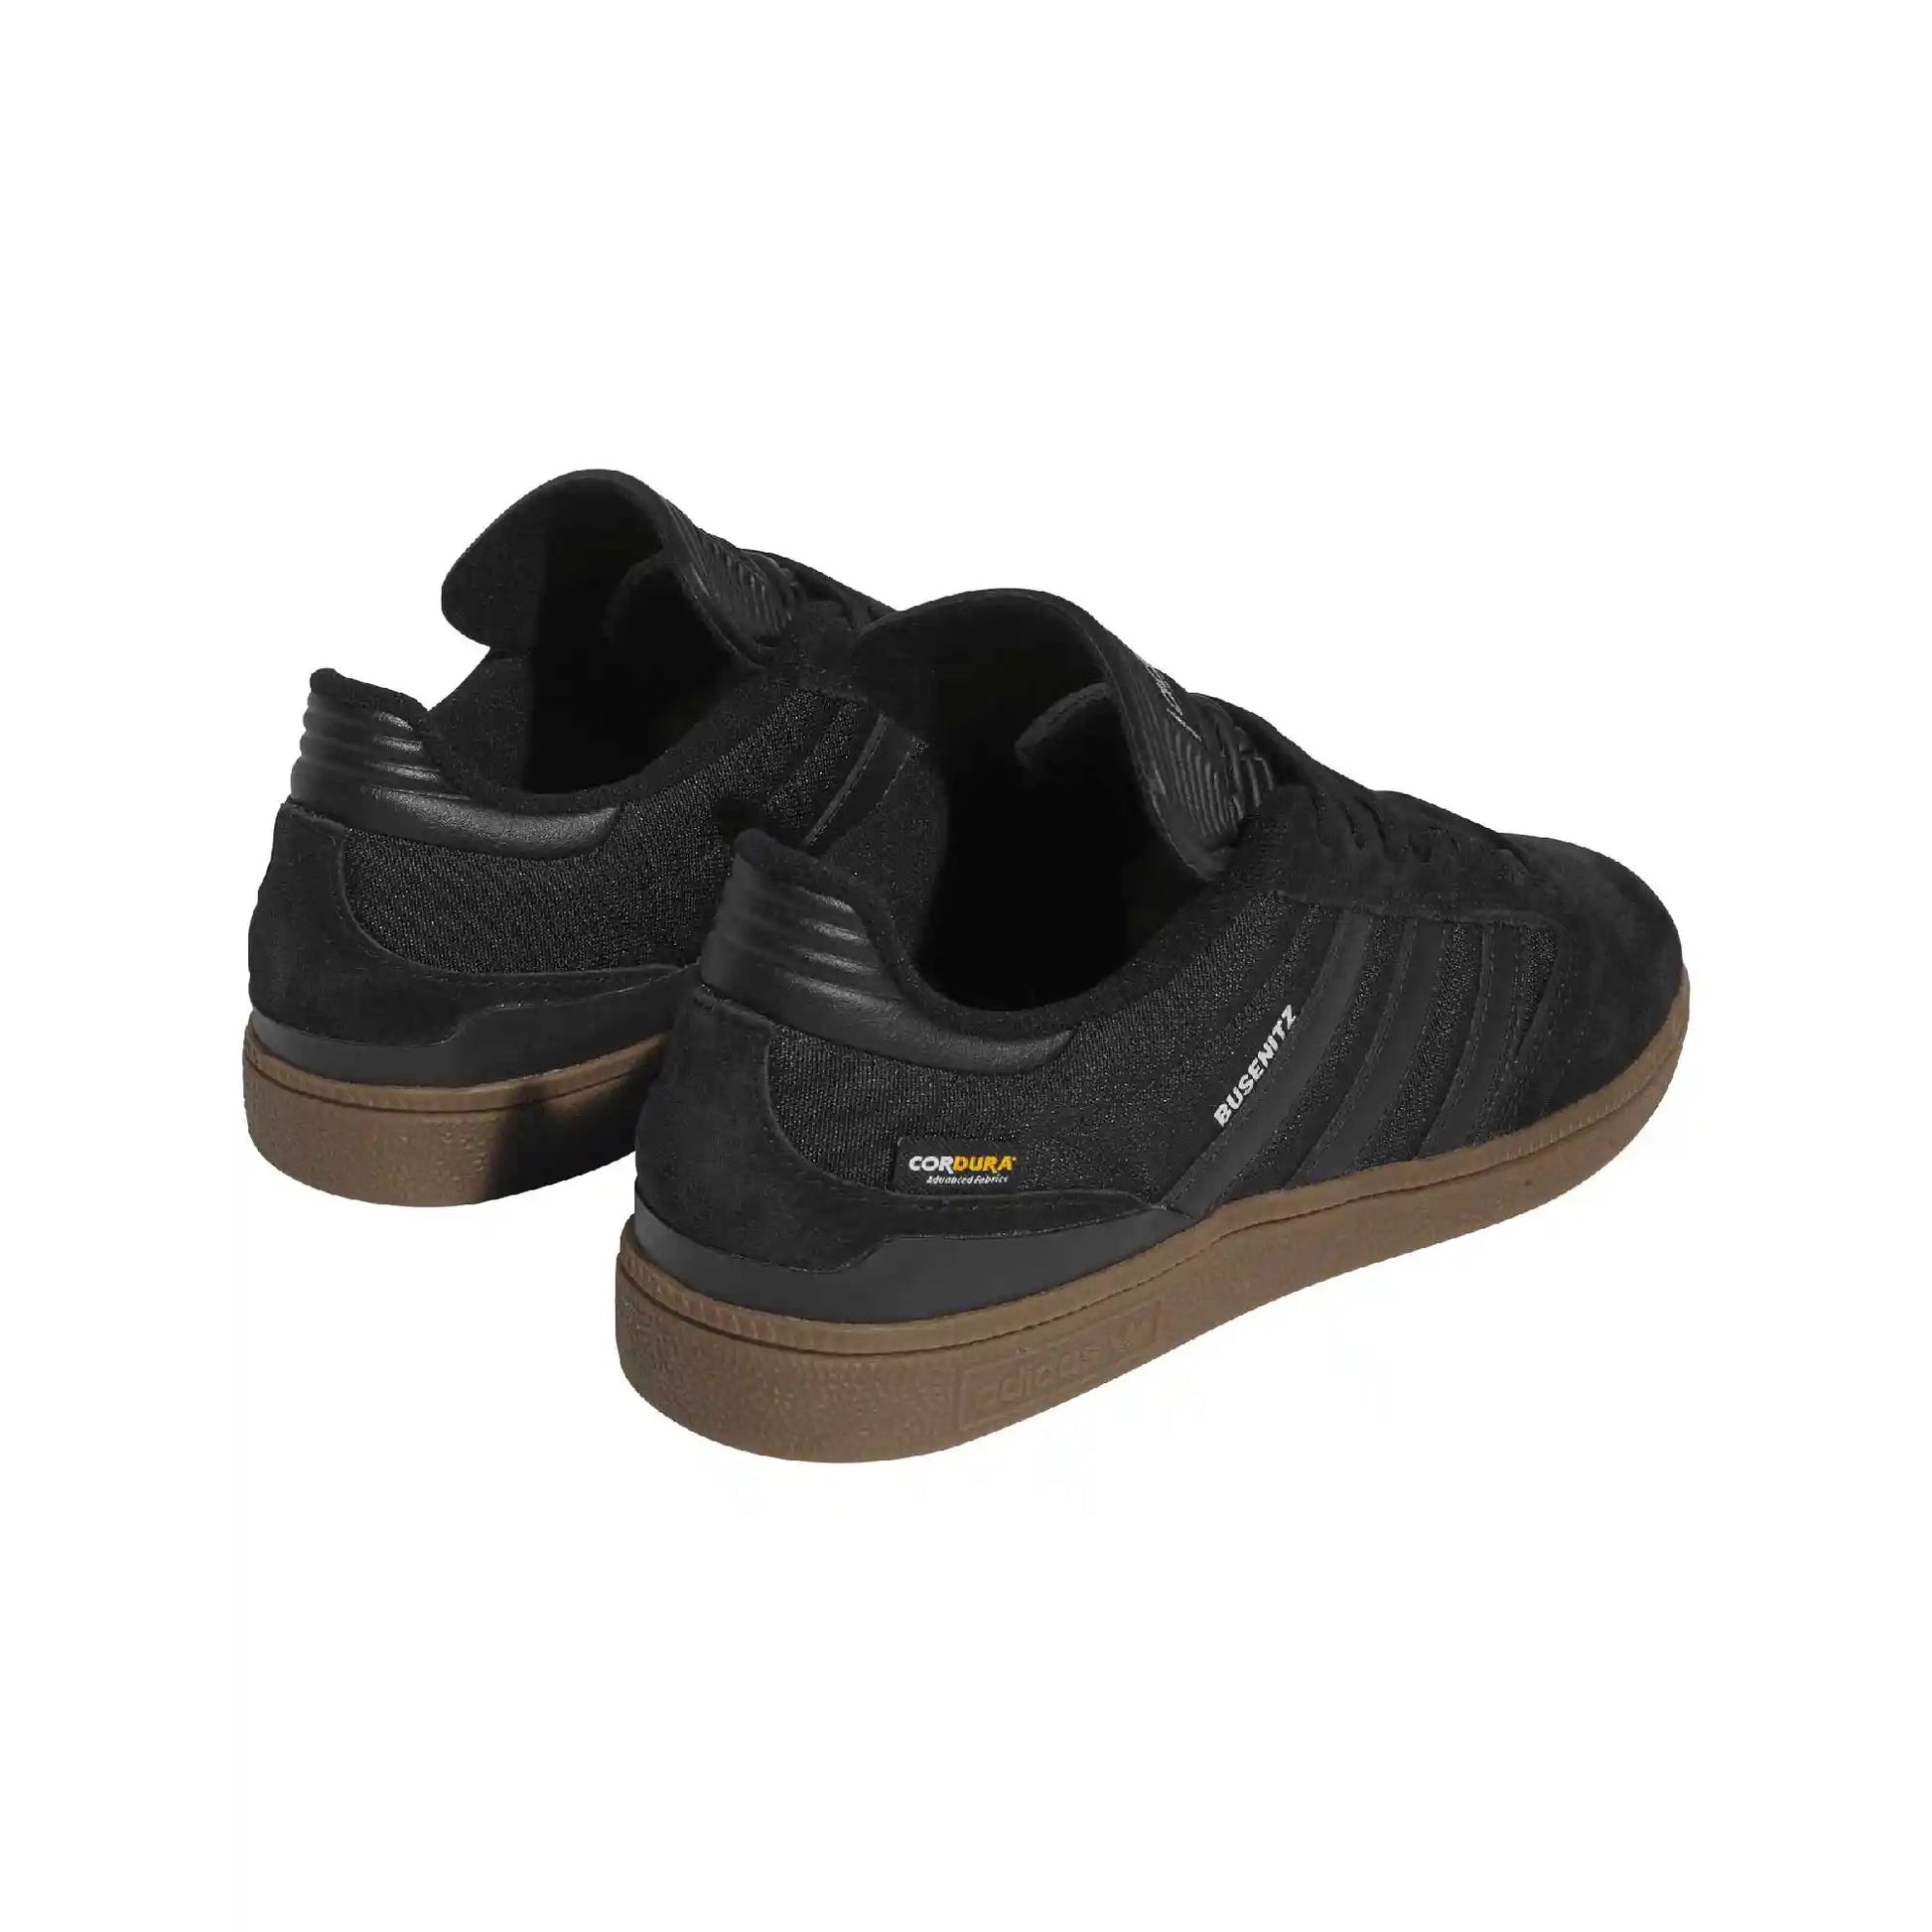 Adidas Busenitz, core black / core black / gum - Tiki Room Skateboards - 6